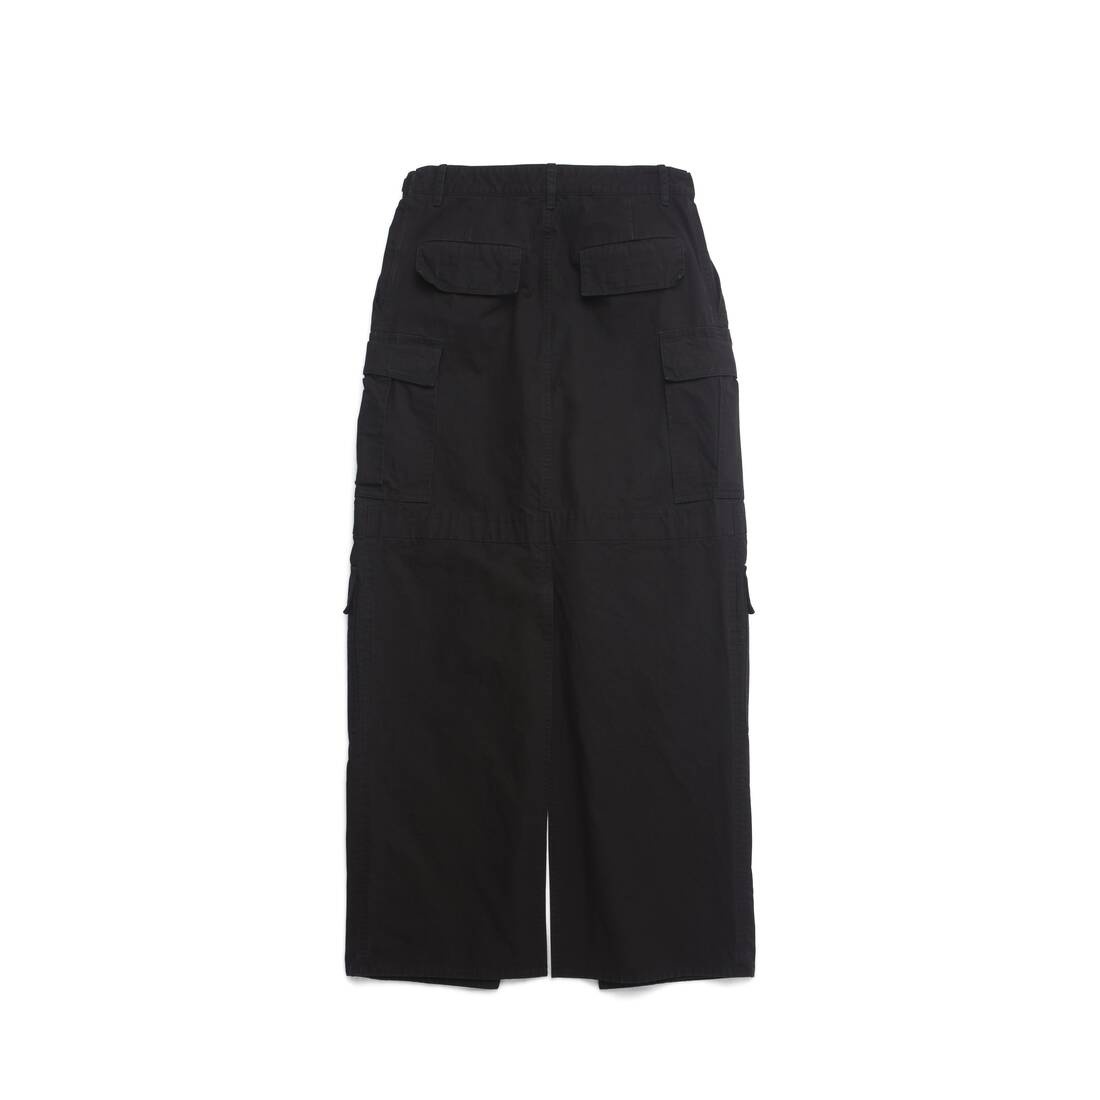 Women's Apron Cargo Pants Skirt in Black - 6